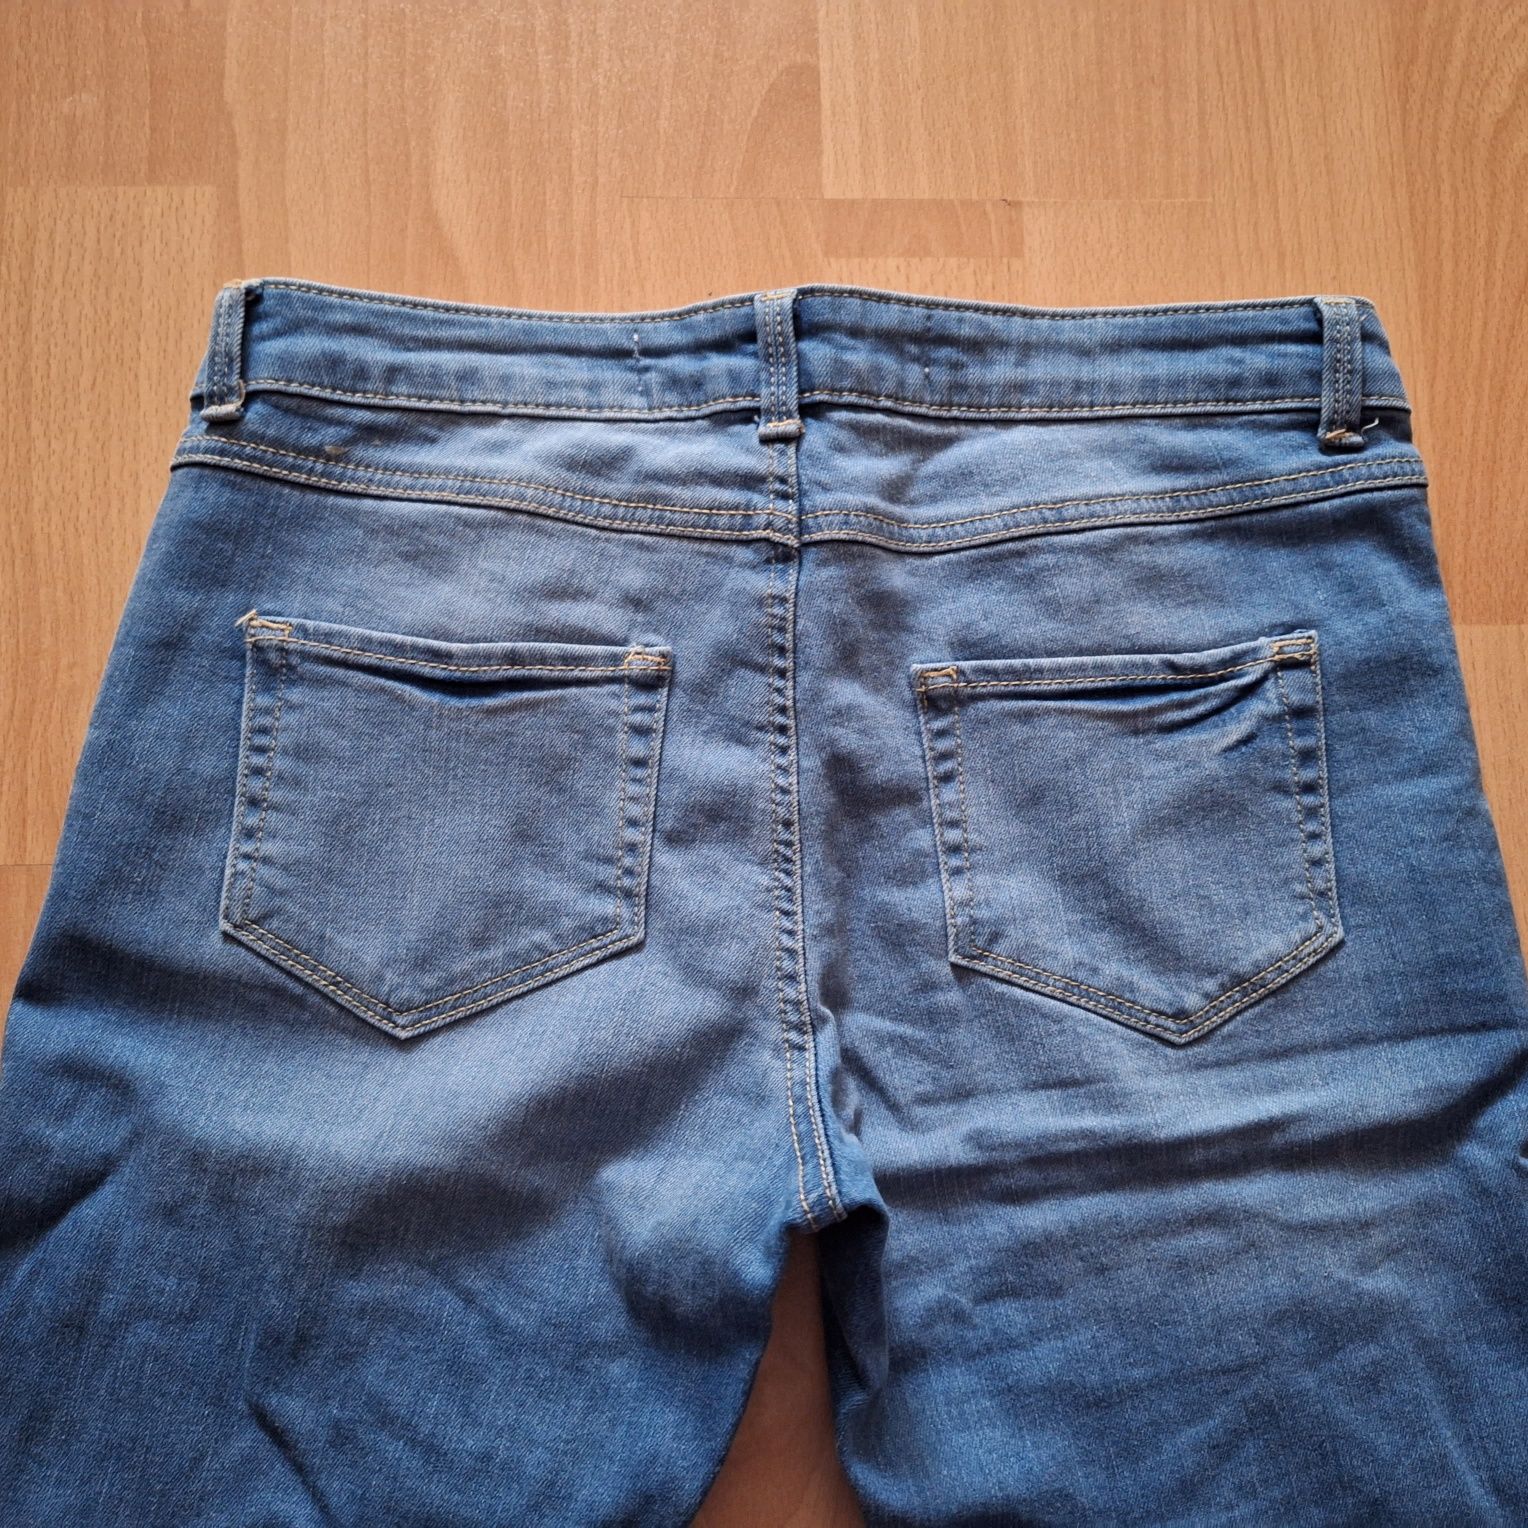 Spodnie damskie jeansy z dziurami 36 S